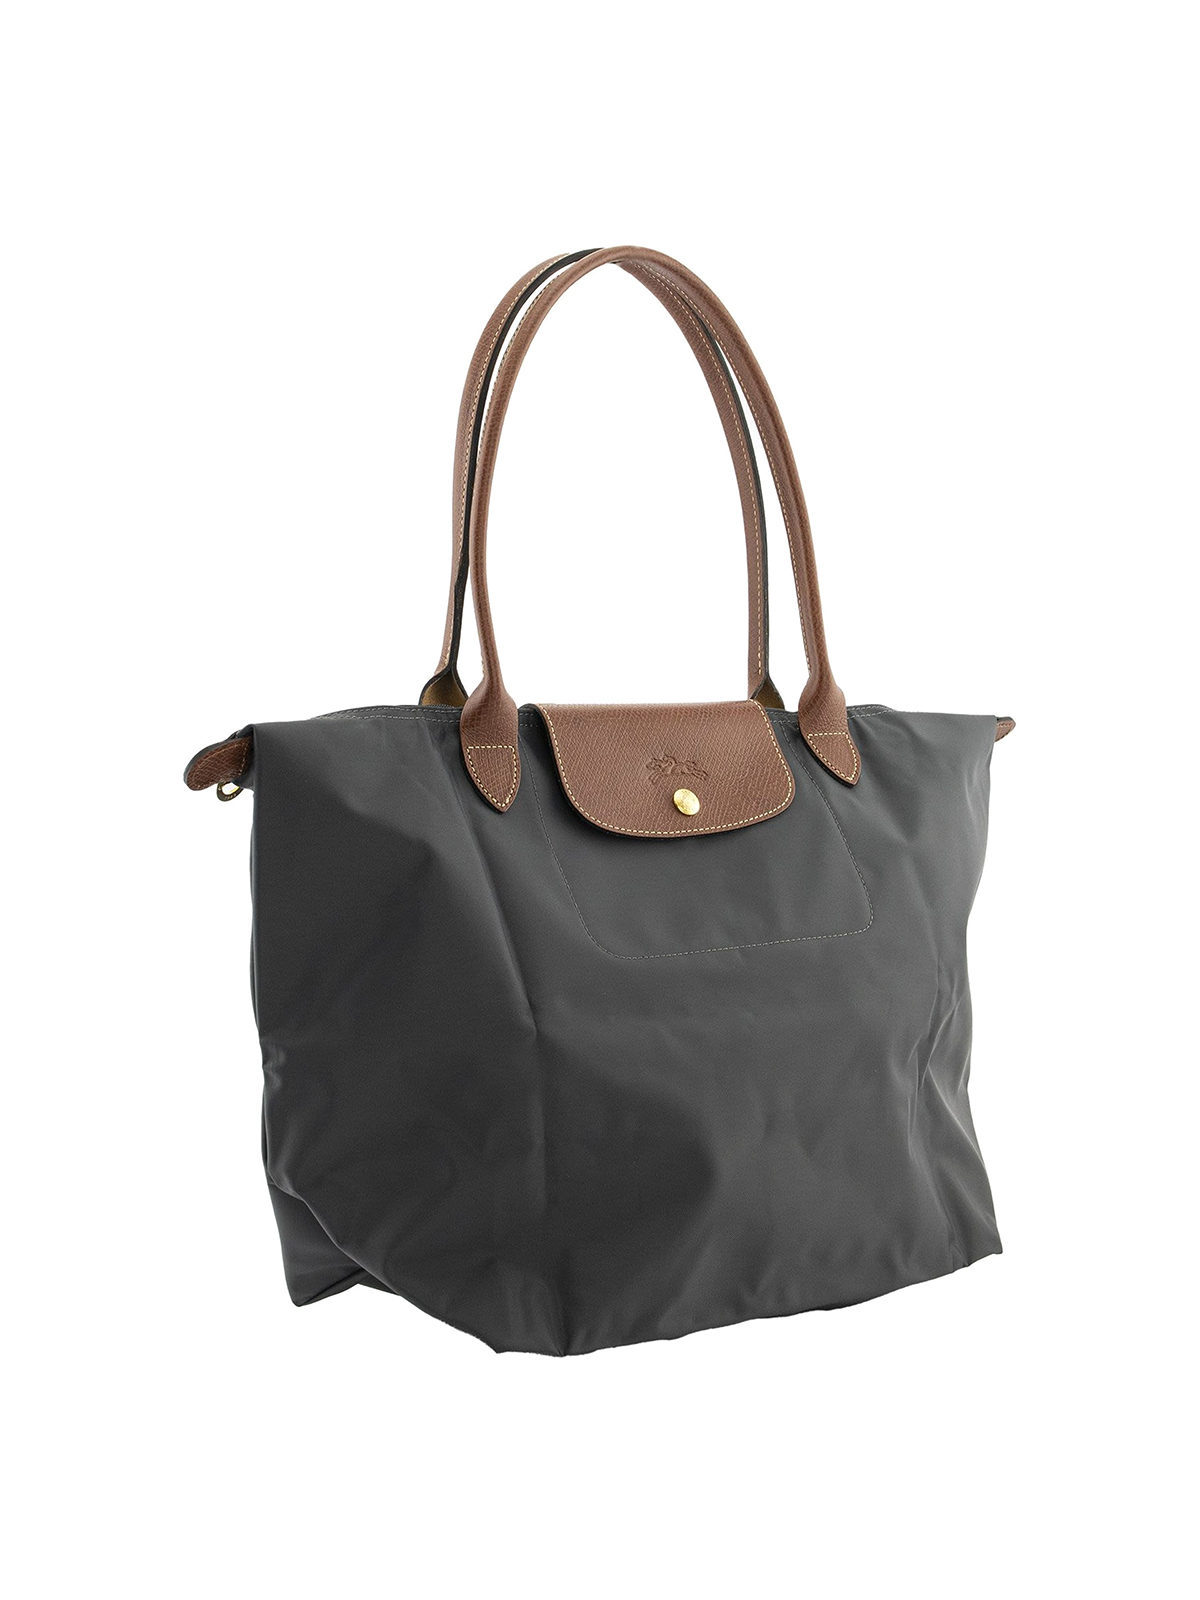 Totes Longchamp - Le Pliage large bag - 1899089300 | iKRIX.com